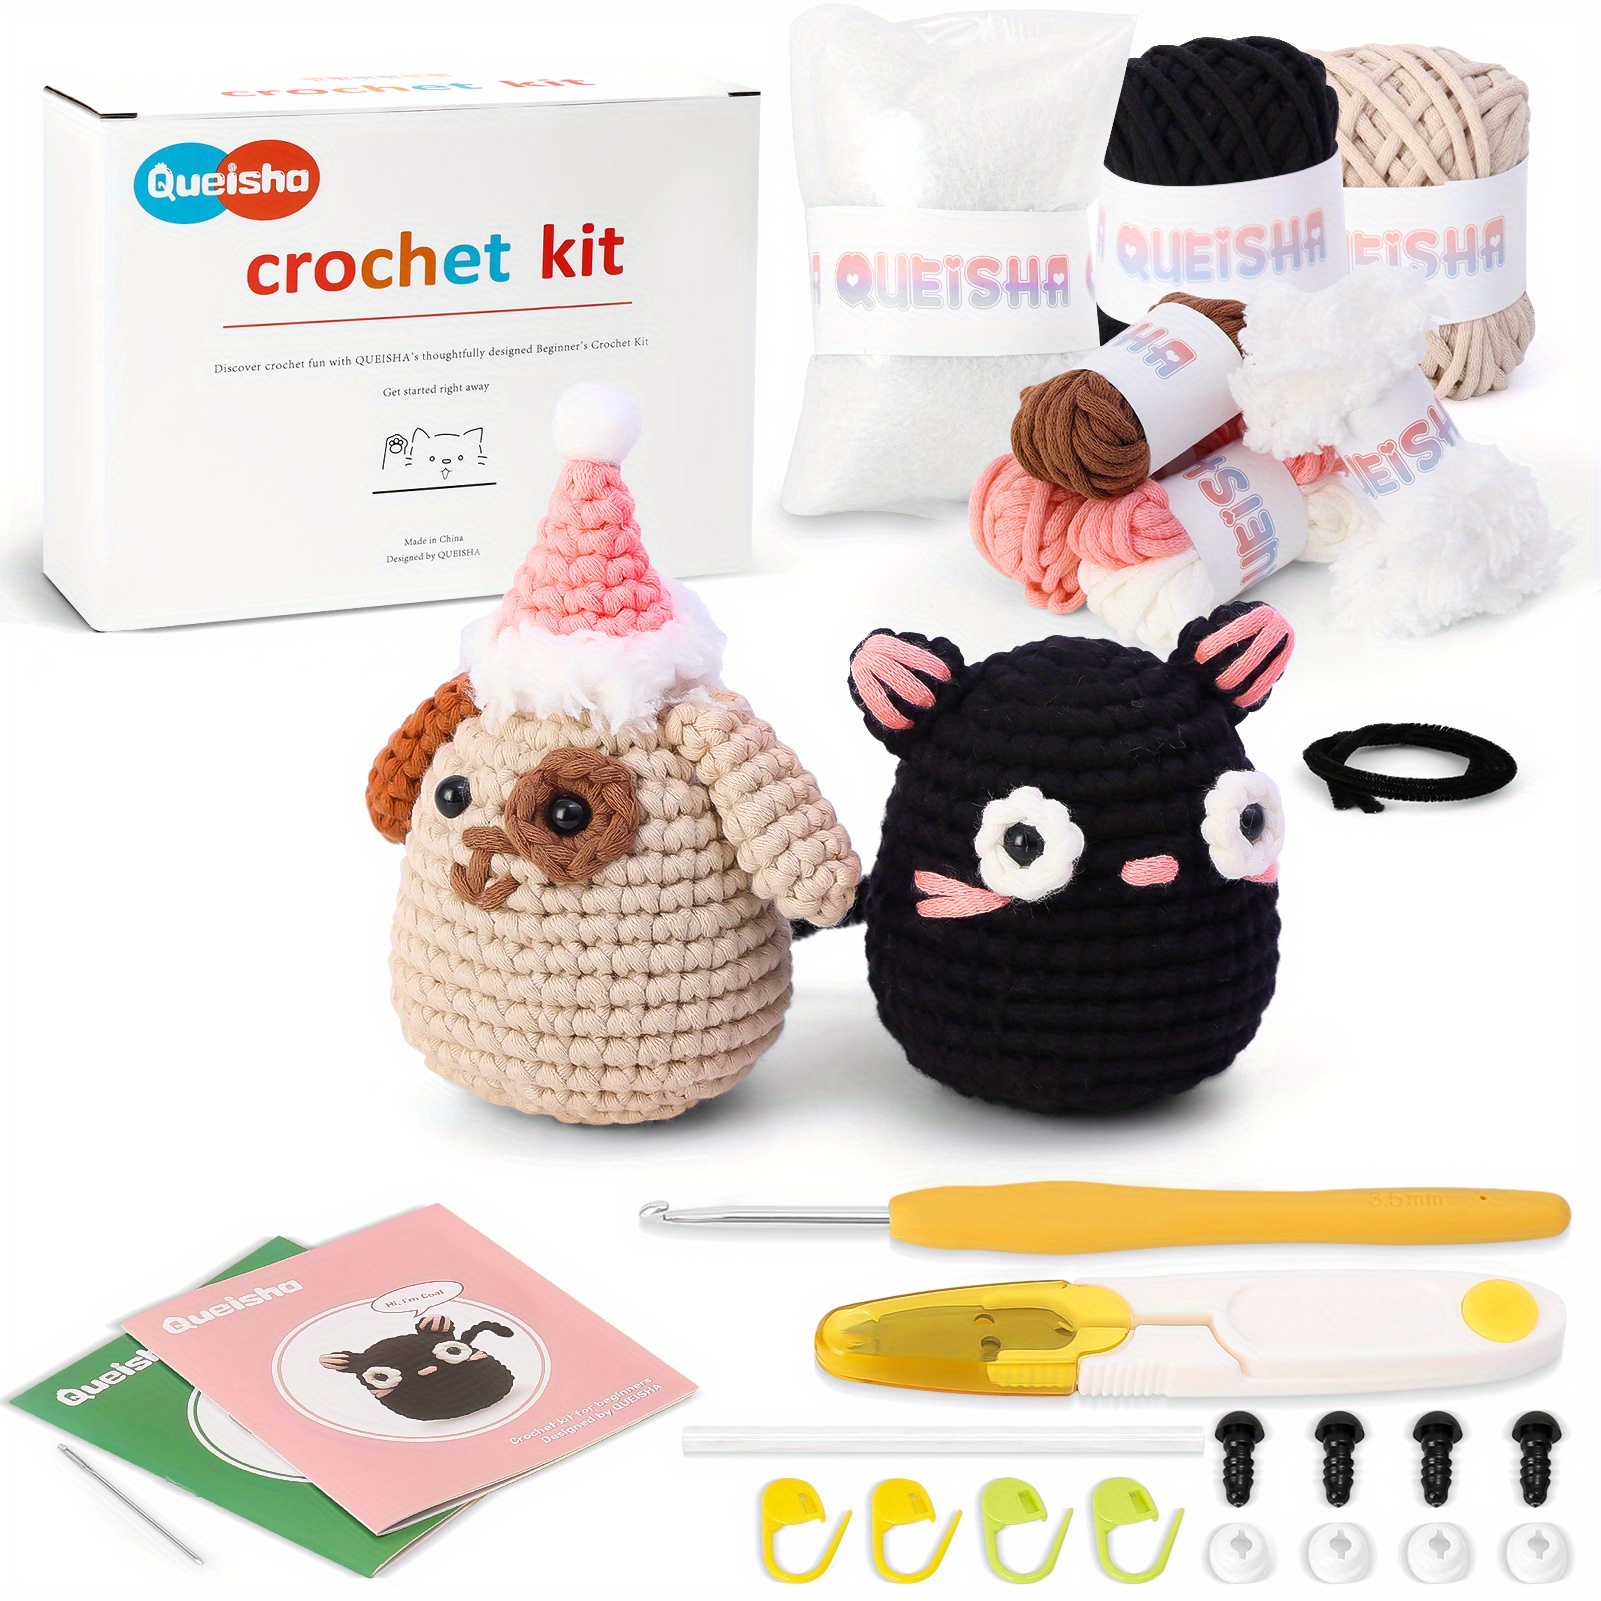 Cat Crochet Kit by The Woobles | Beginners Crochet Kit